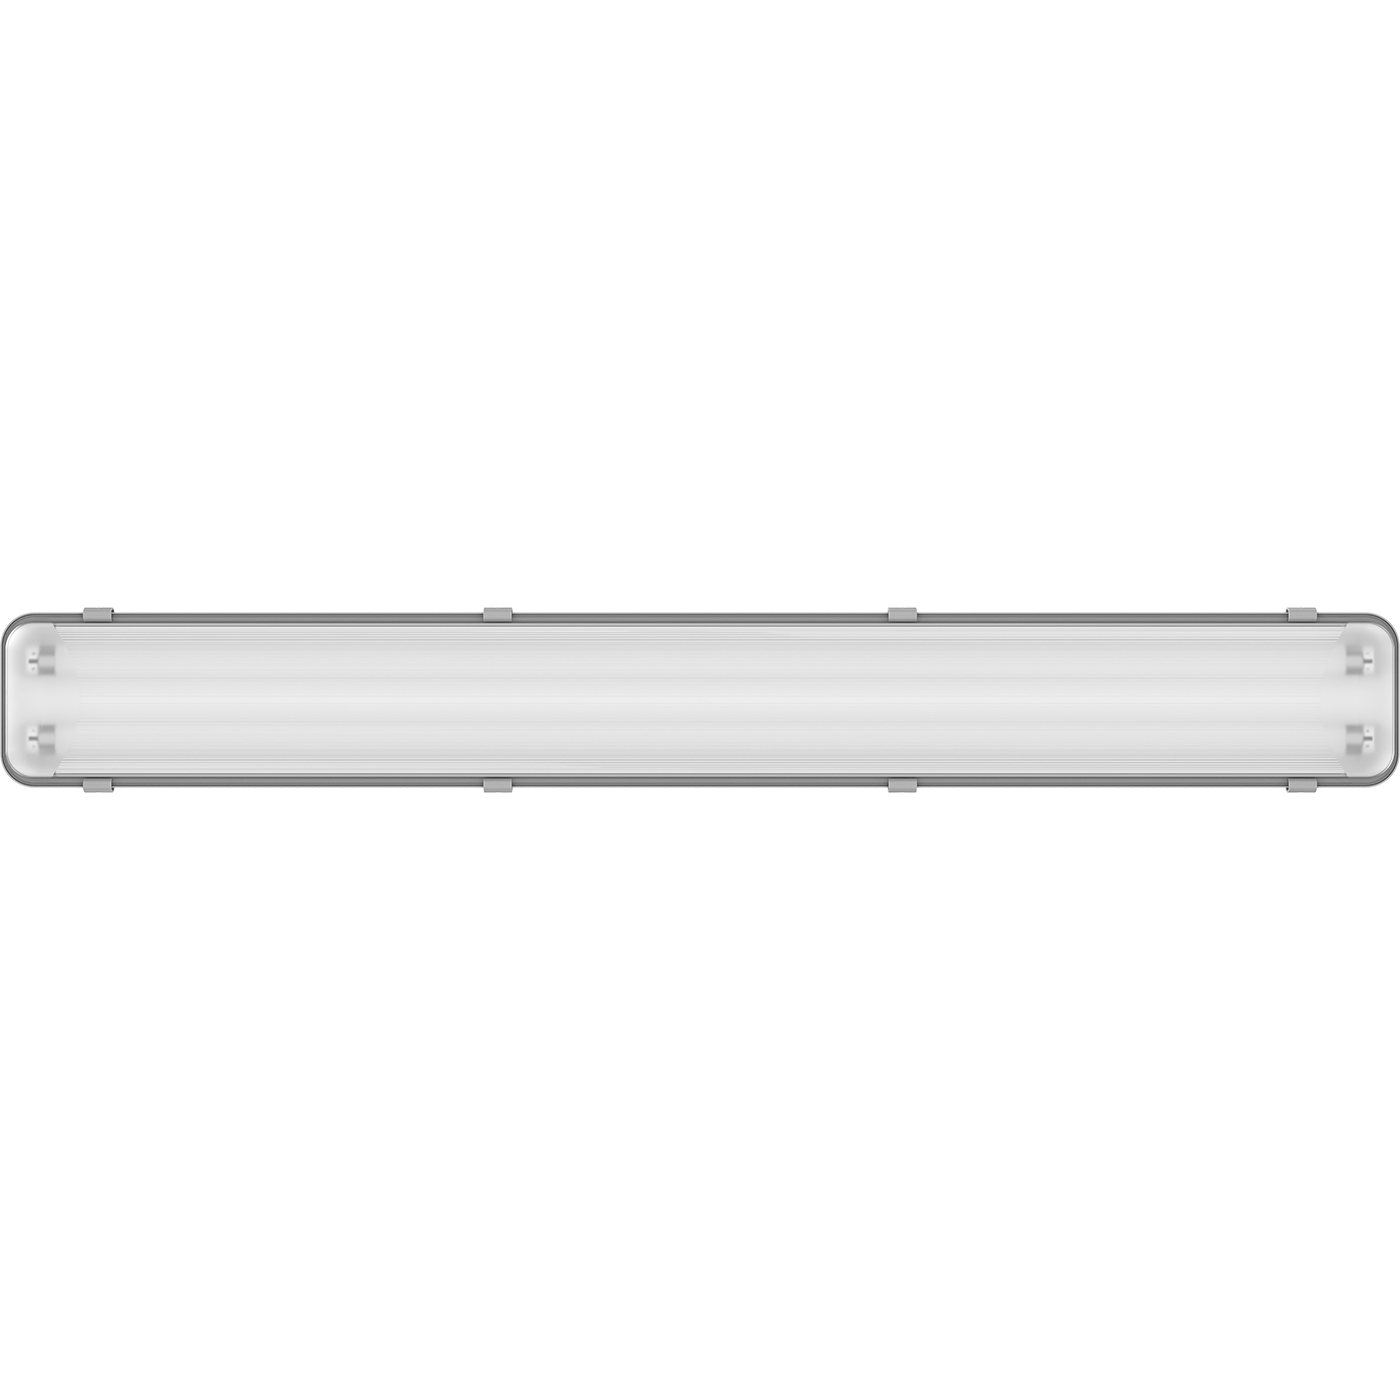 ламповые ARCTIC 254 (SAN/SMC) HF, артикул 1069002610